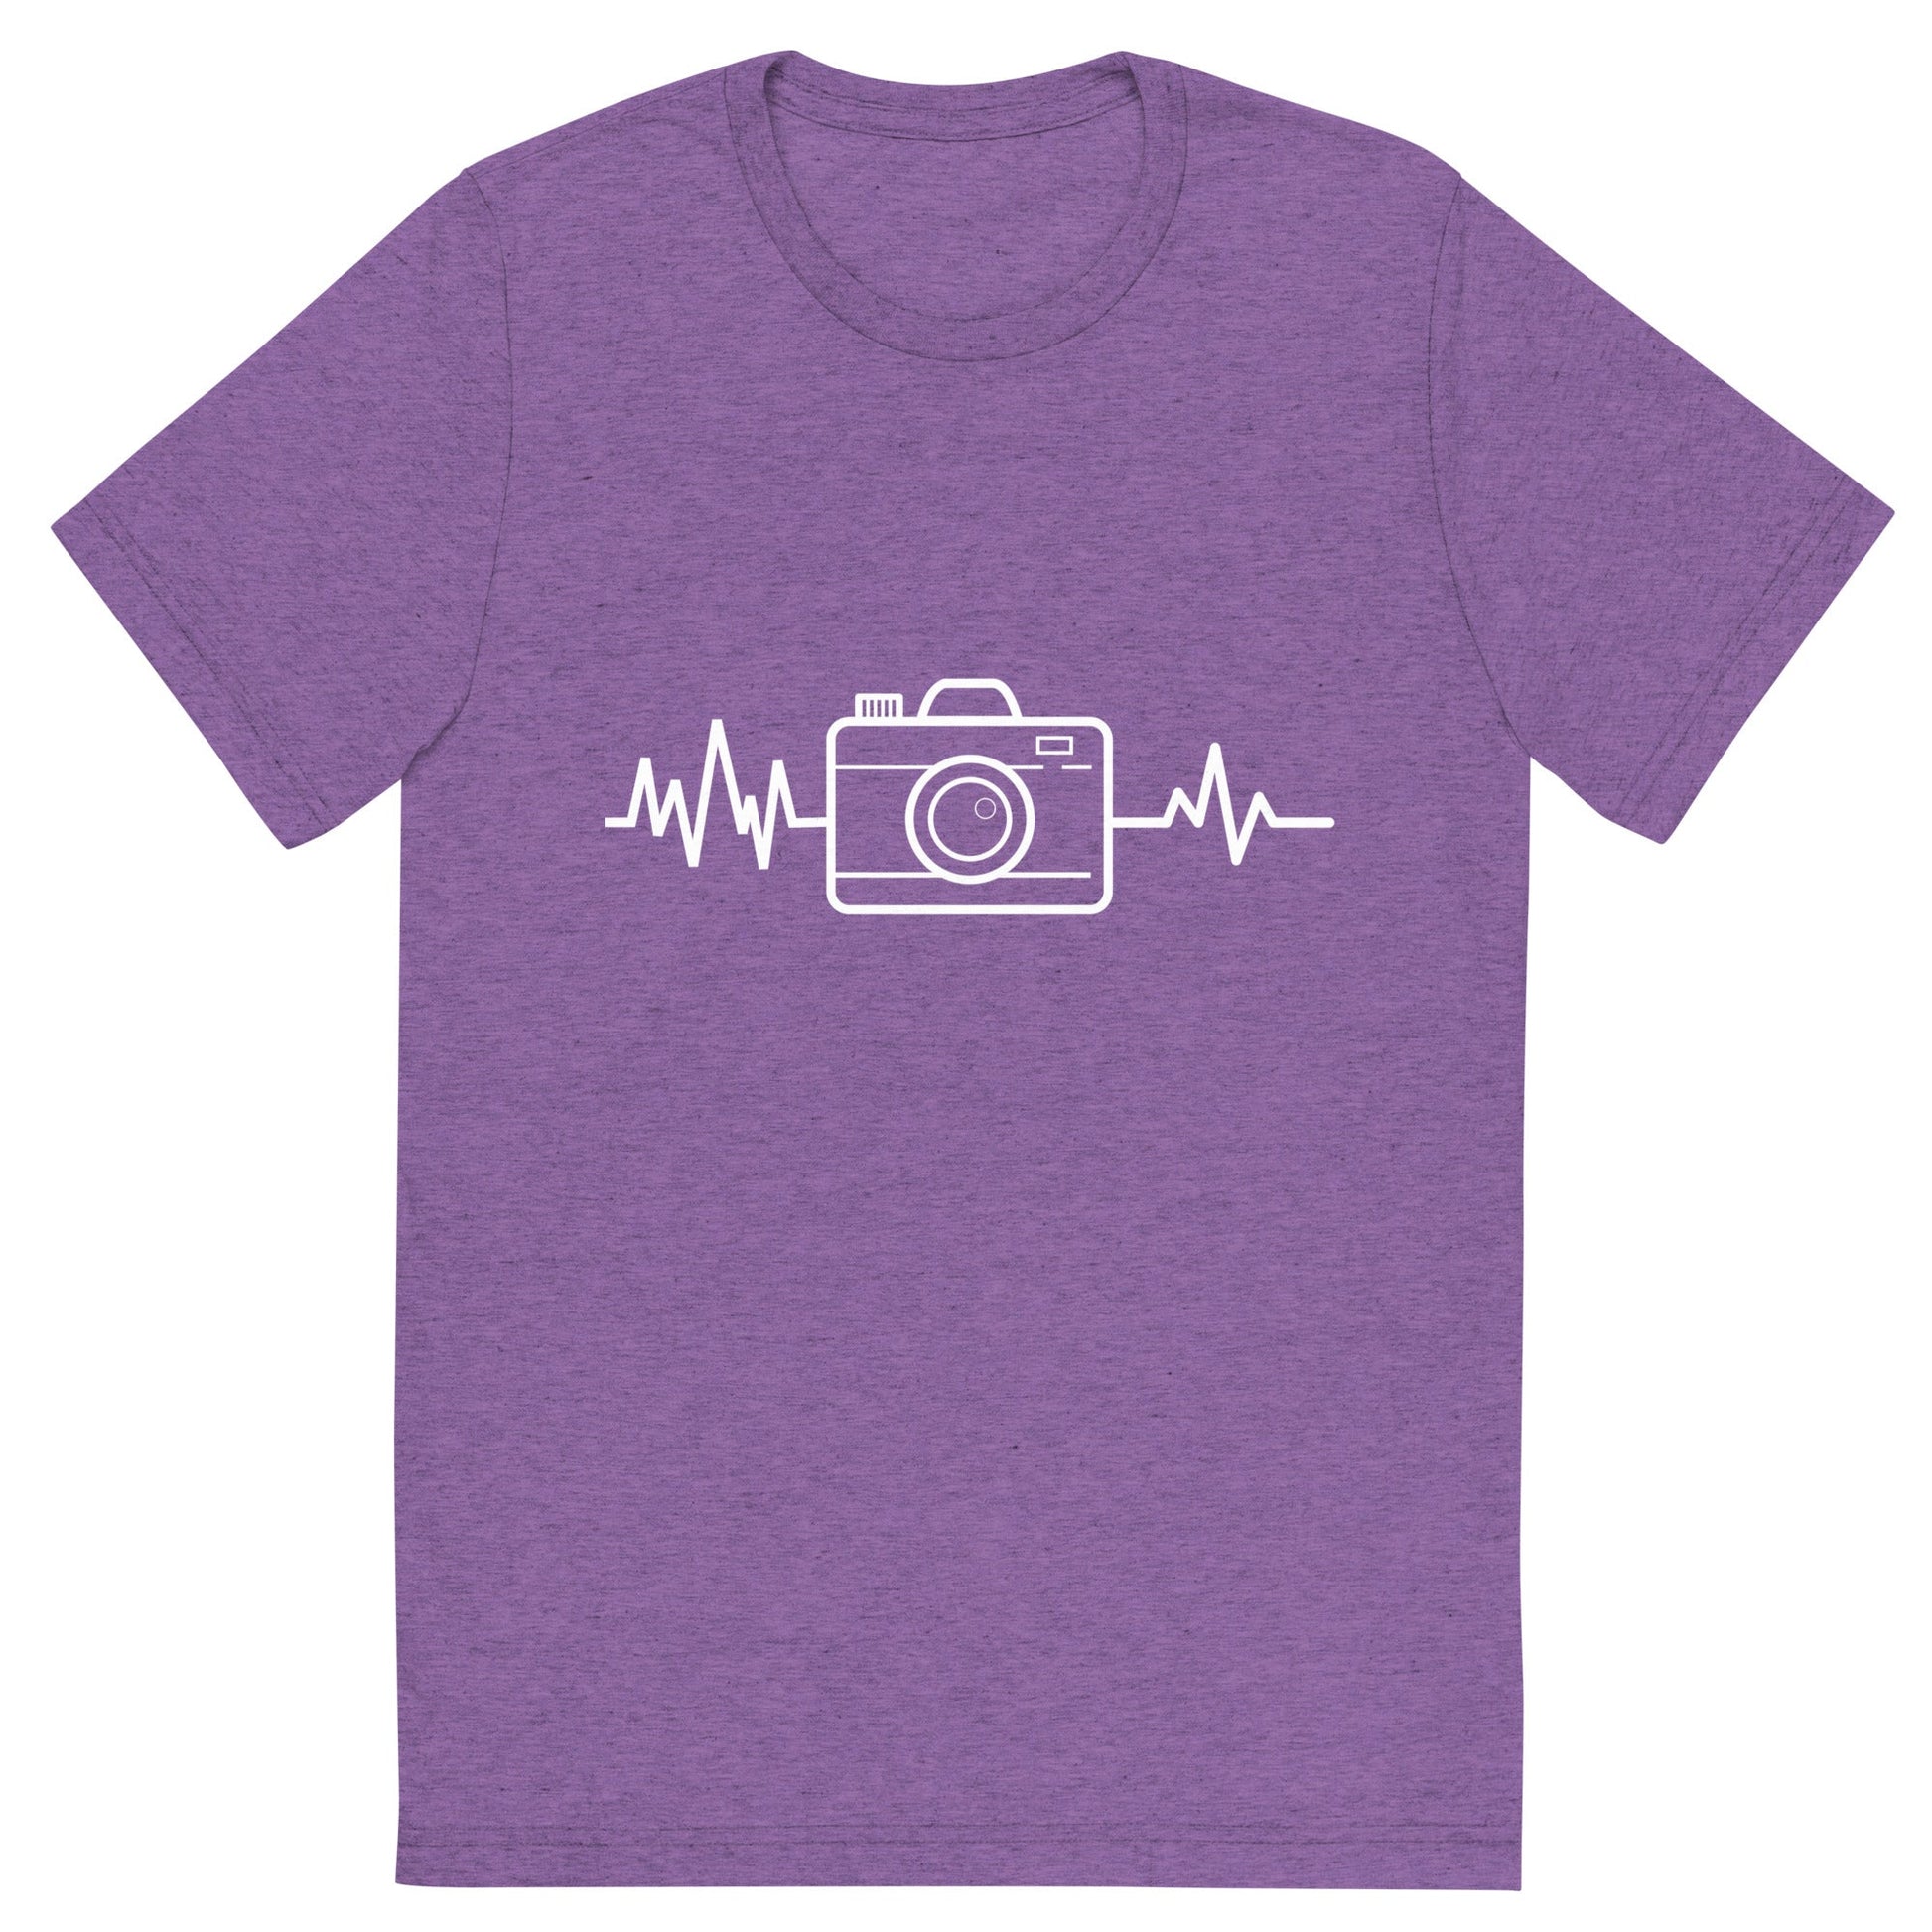 Camera Heartbeat Shirt, Gift for Photographer, Photographer Short Sleeve T-Shirt, Camera Shirt, Photographer Gift, Photographer T-Shirts, Heartbeat TeeShirt - ShopJeanPhotography.com